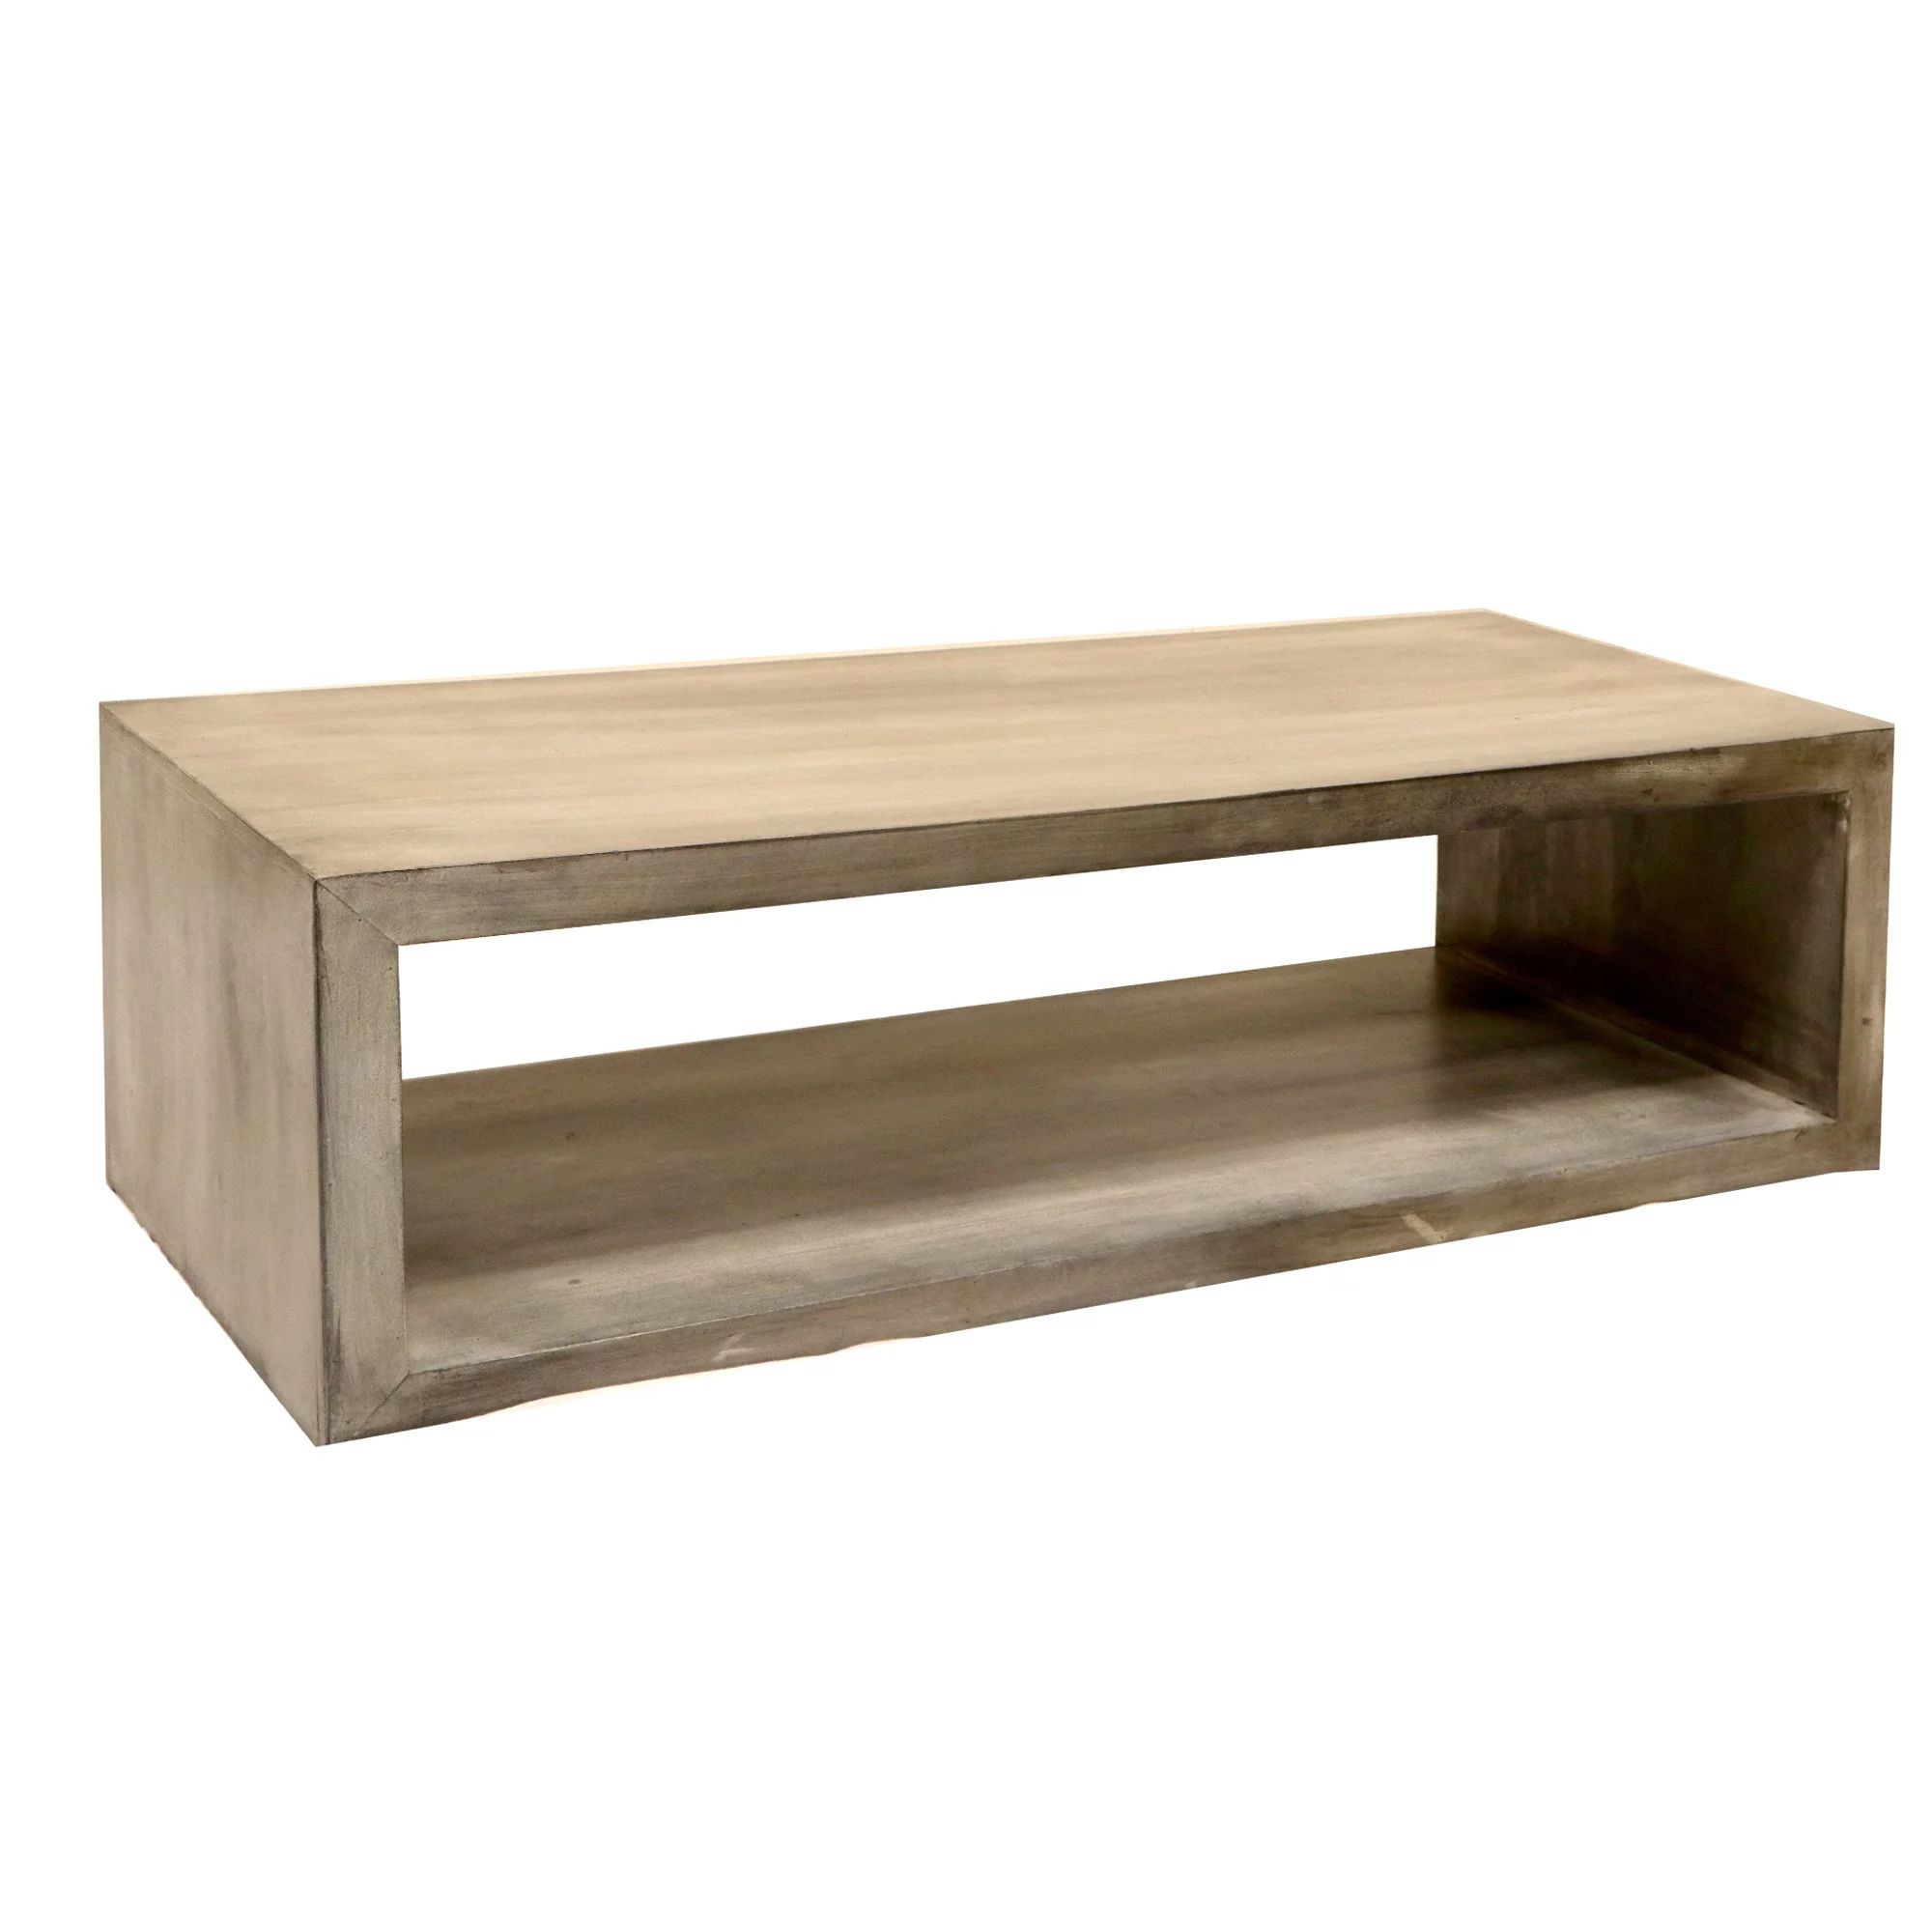 58" Cube Shape Wooden Coffee Table with Open Bottom Shelf, Charcoal Gray - Walmart.com | Walmart (US)